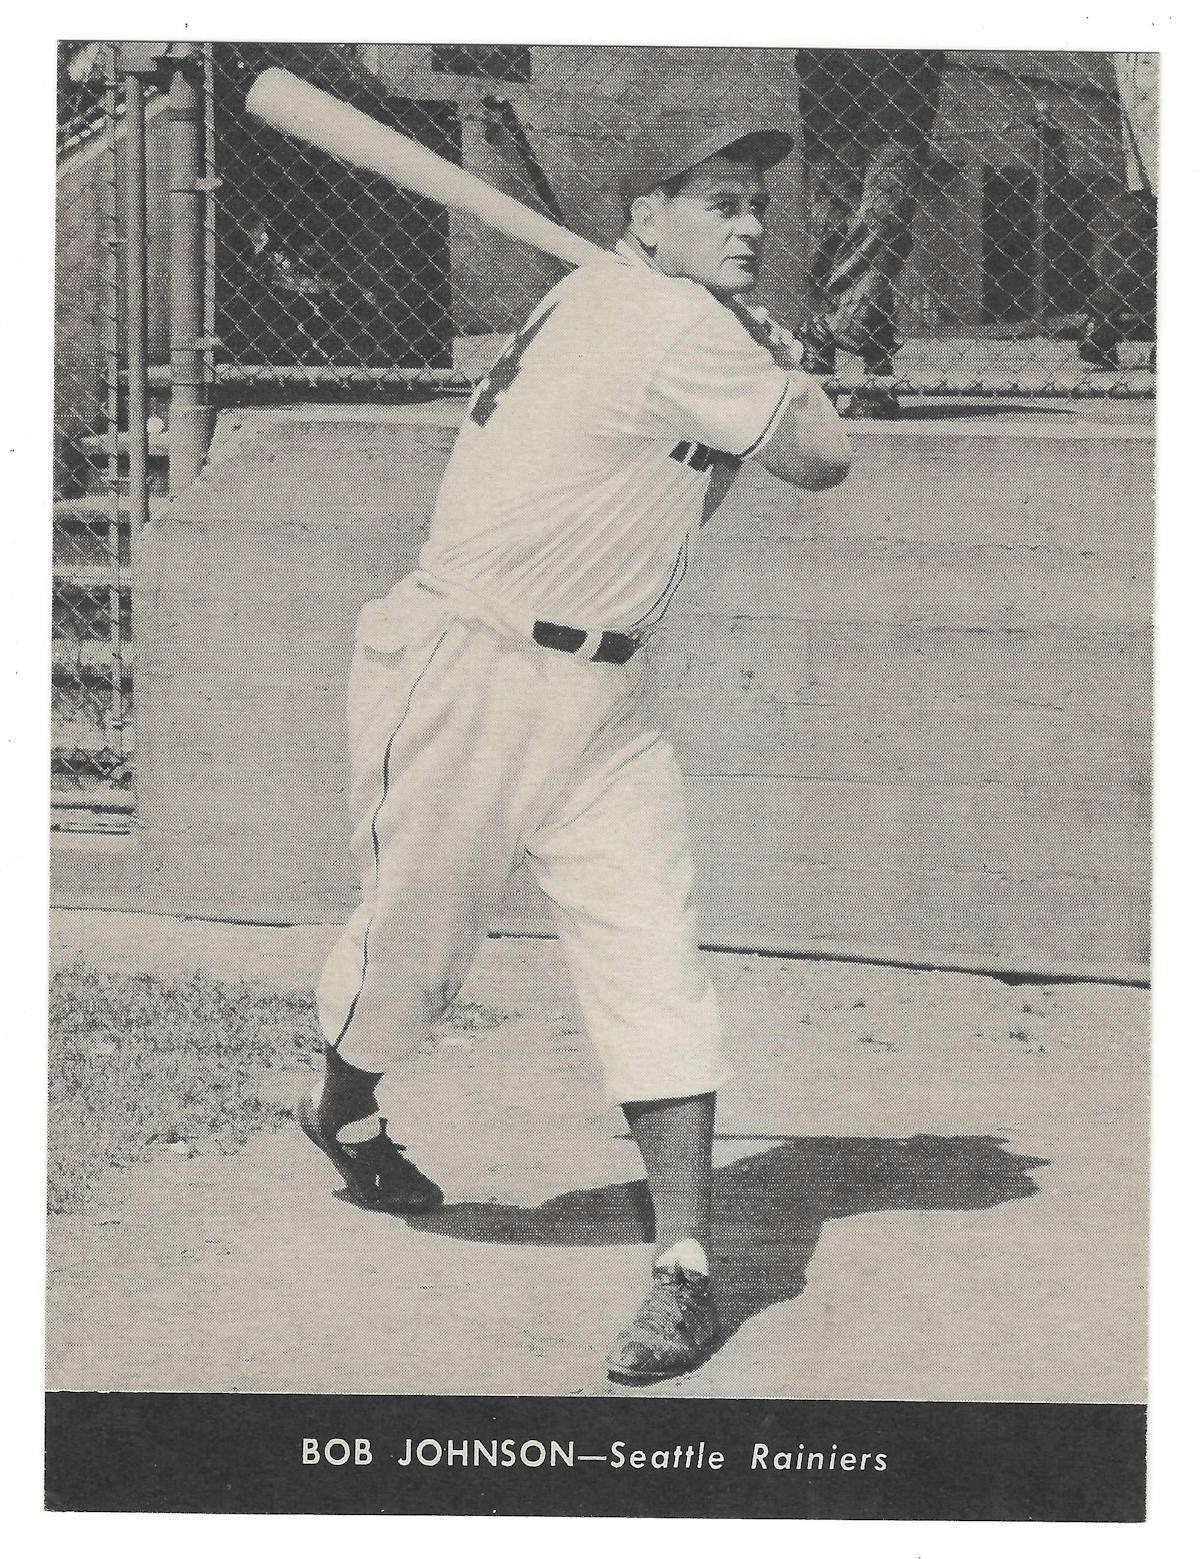 a vintage photo of a baseball player holding a bat